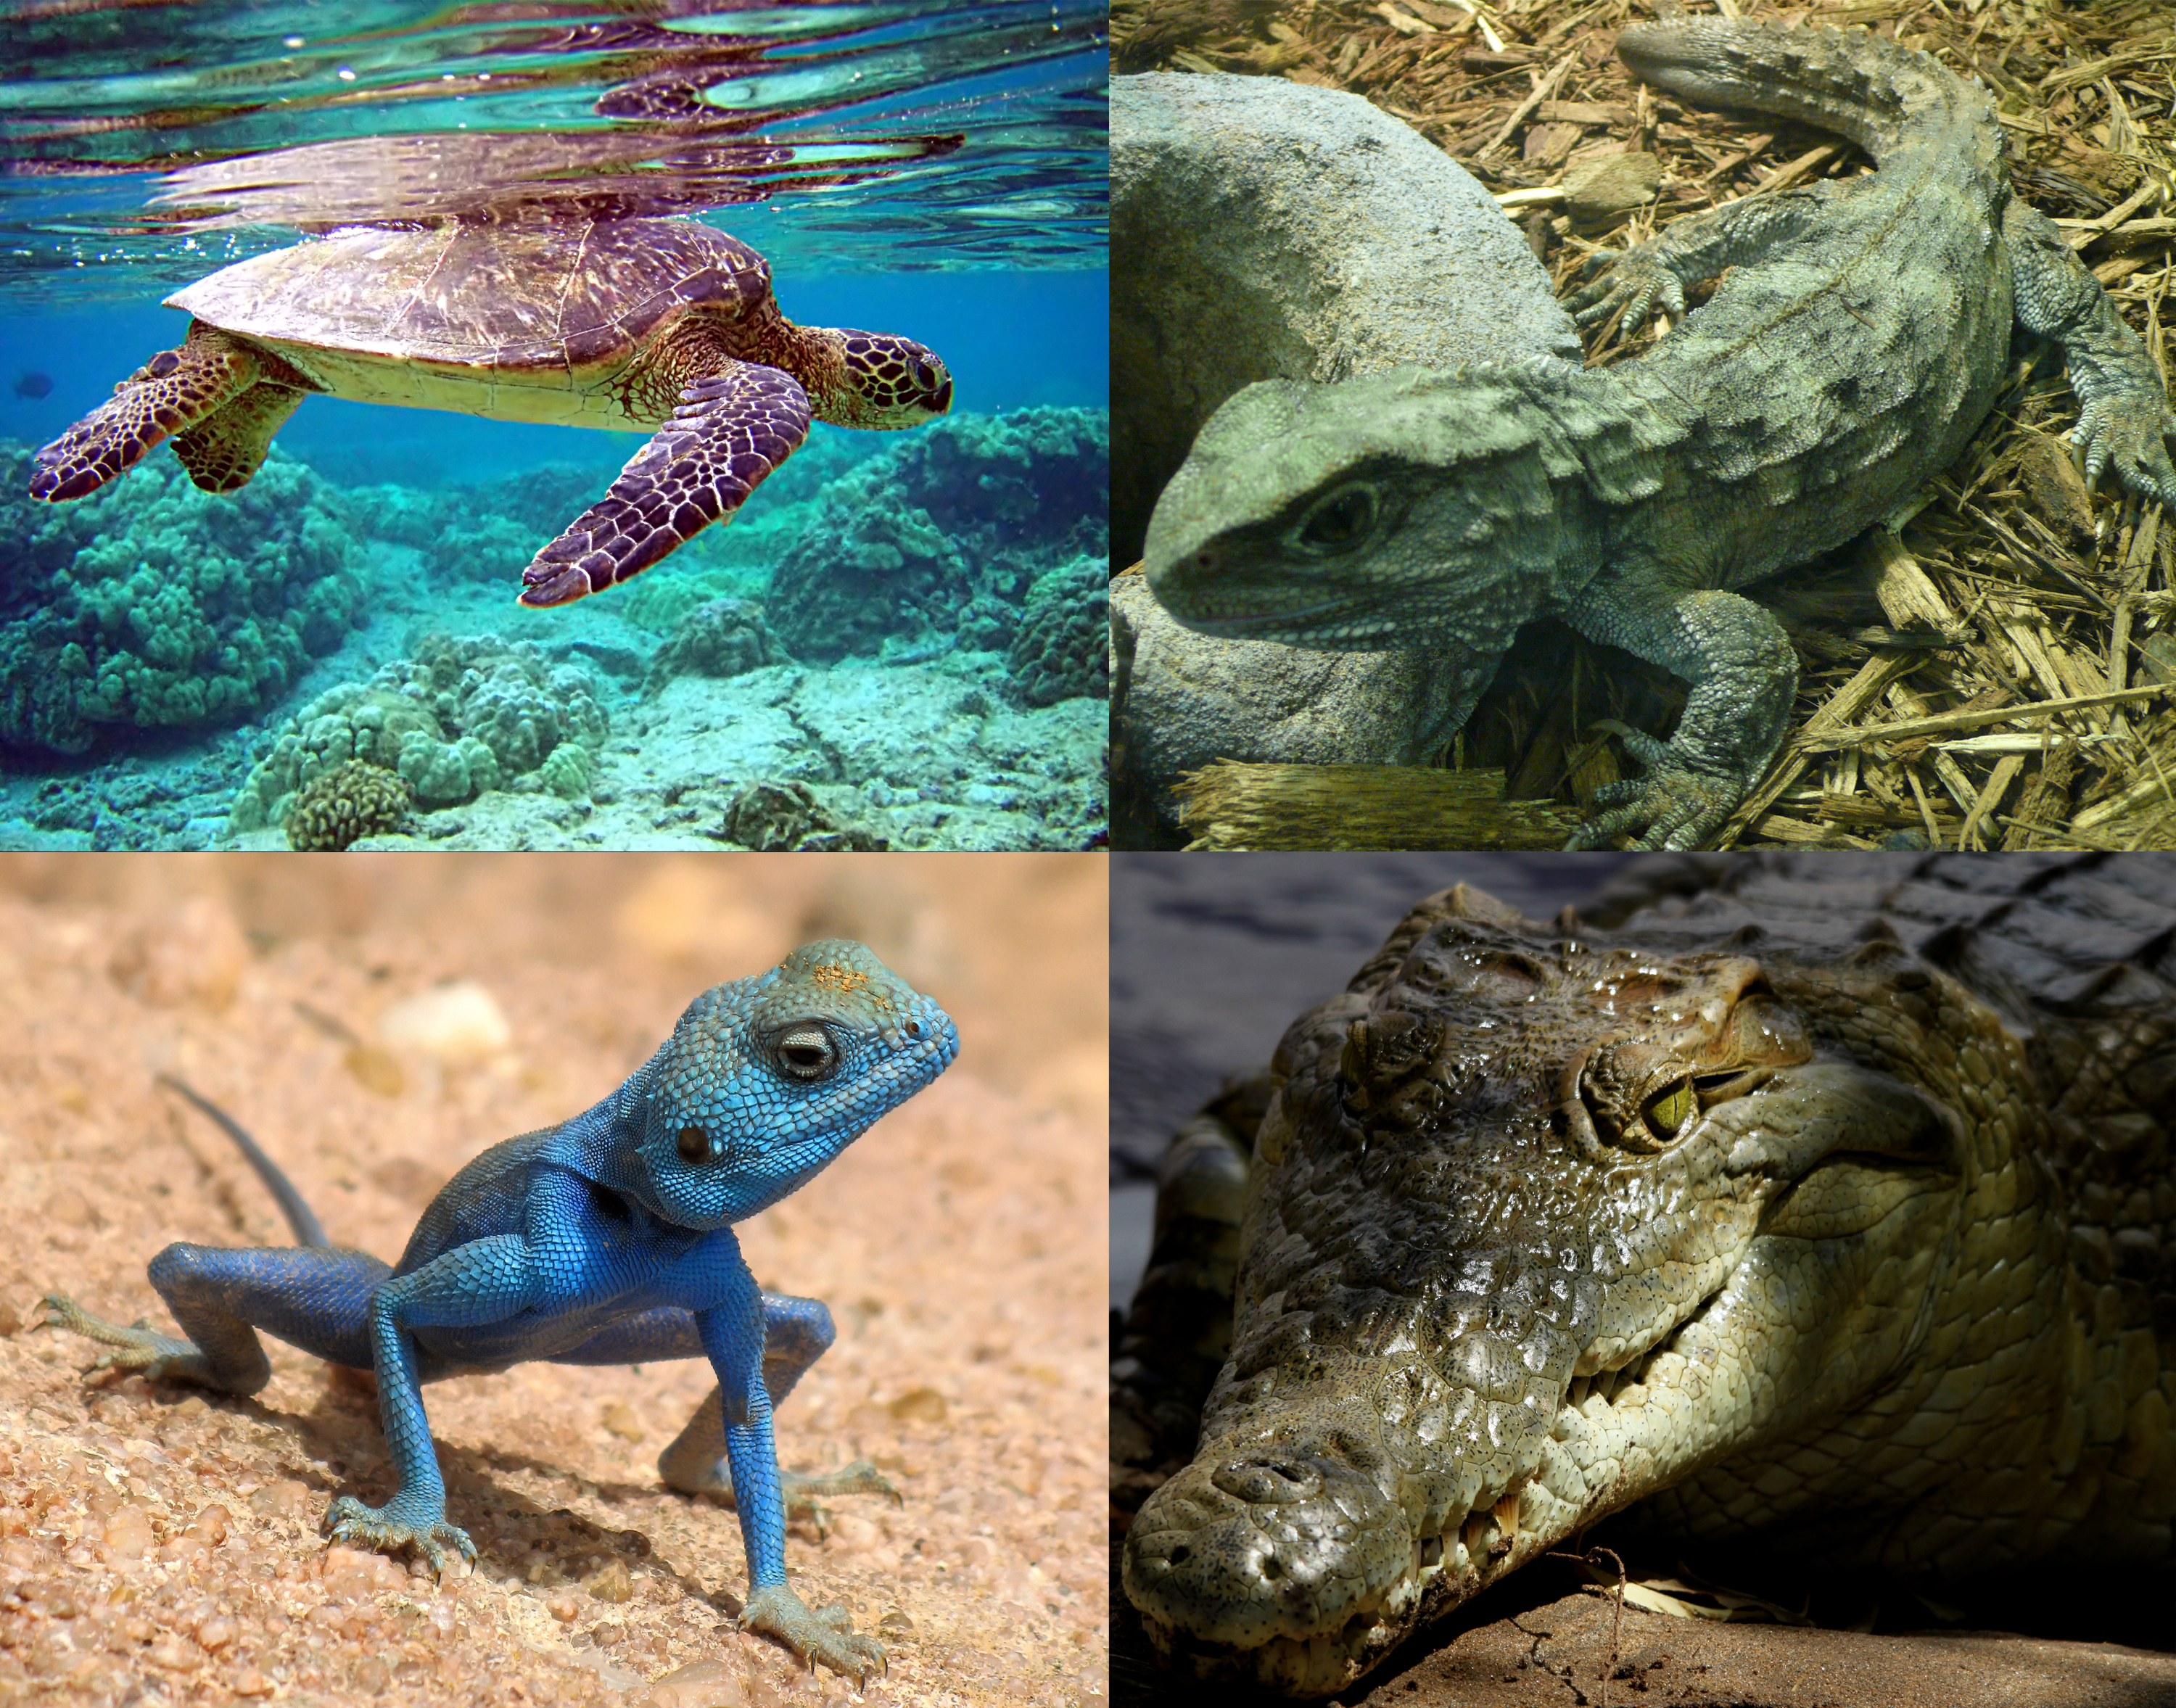 Diversity of reptiles: Clockwise from above left: Green sea turtle (Chelonia mydas), Tuatara (Sphenodon punctatus), Nile crocodile (Crocodylus niloticus), and Sinai agama (Pseudotrapelus sinaitus)